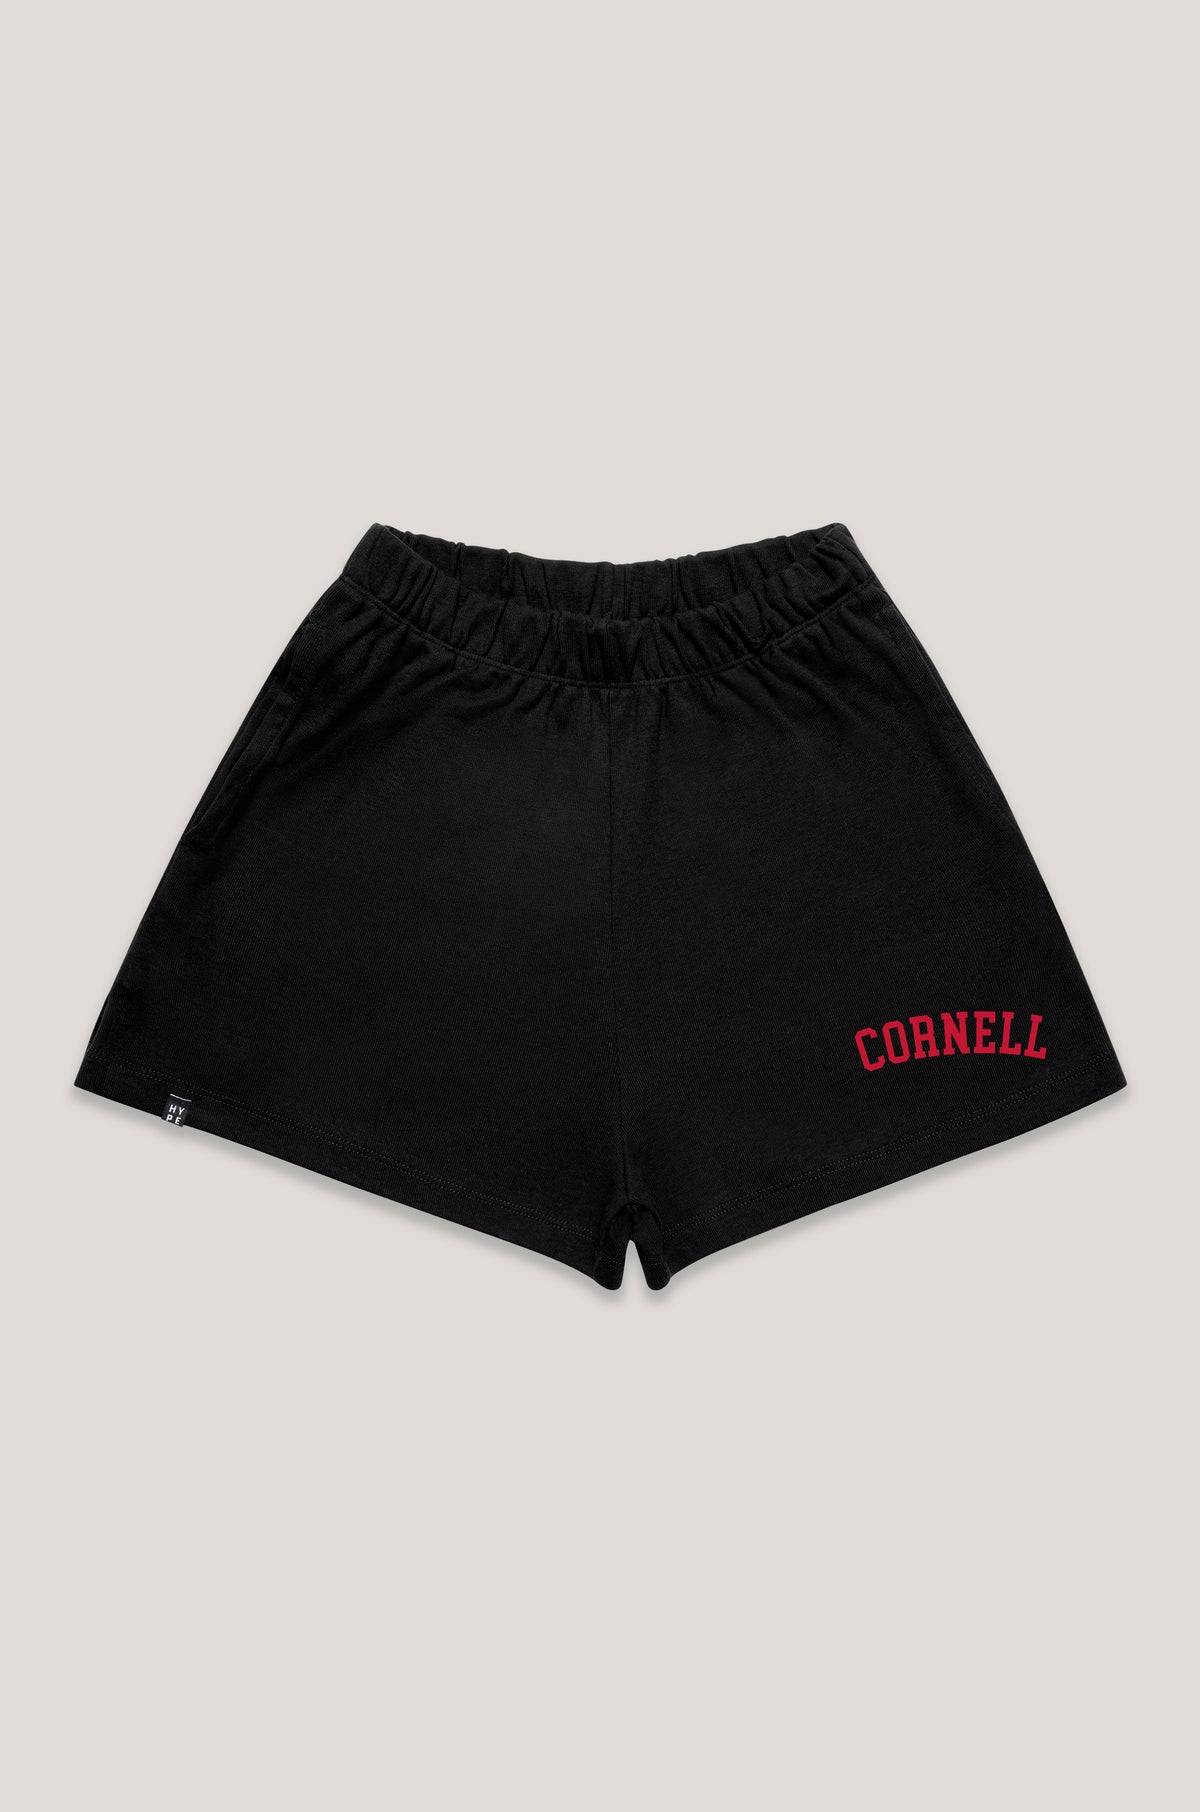 Cornell Track Shorts